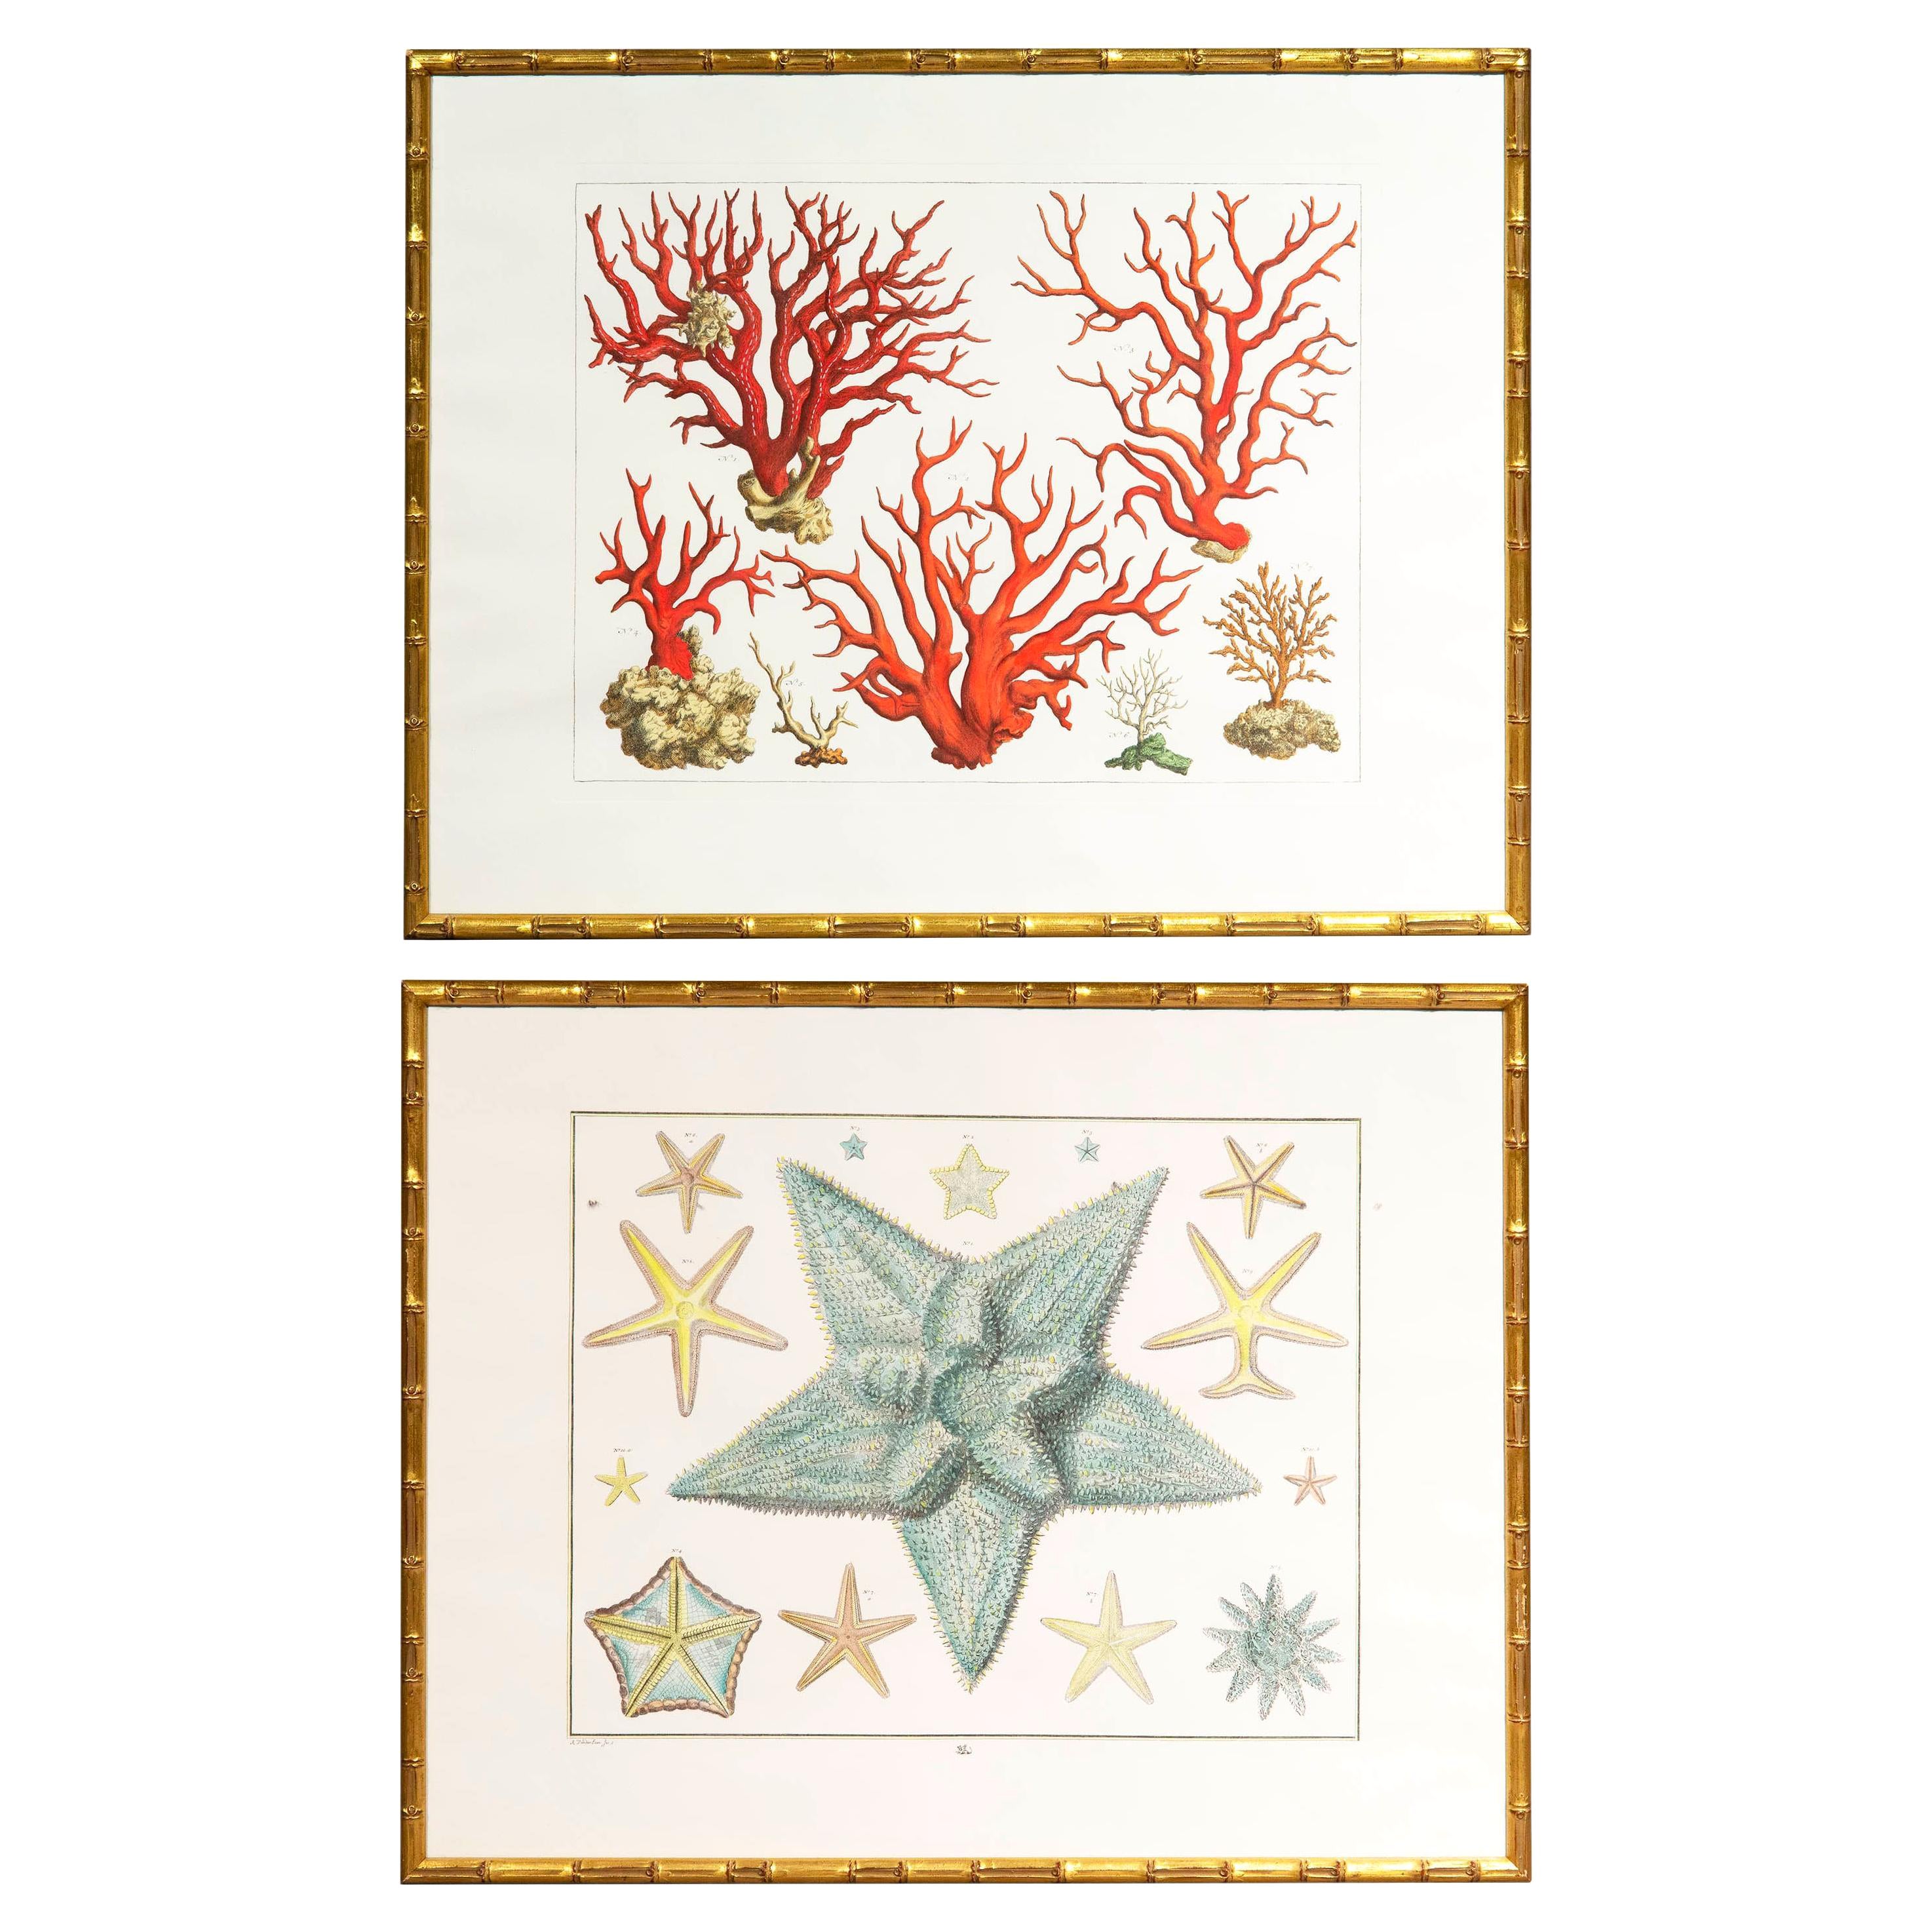 Pair of Large Prints of Corals and Starfish after Albertus Seba